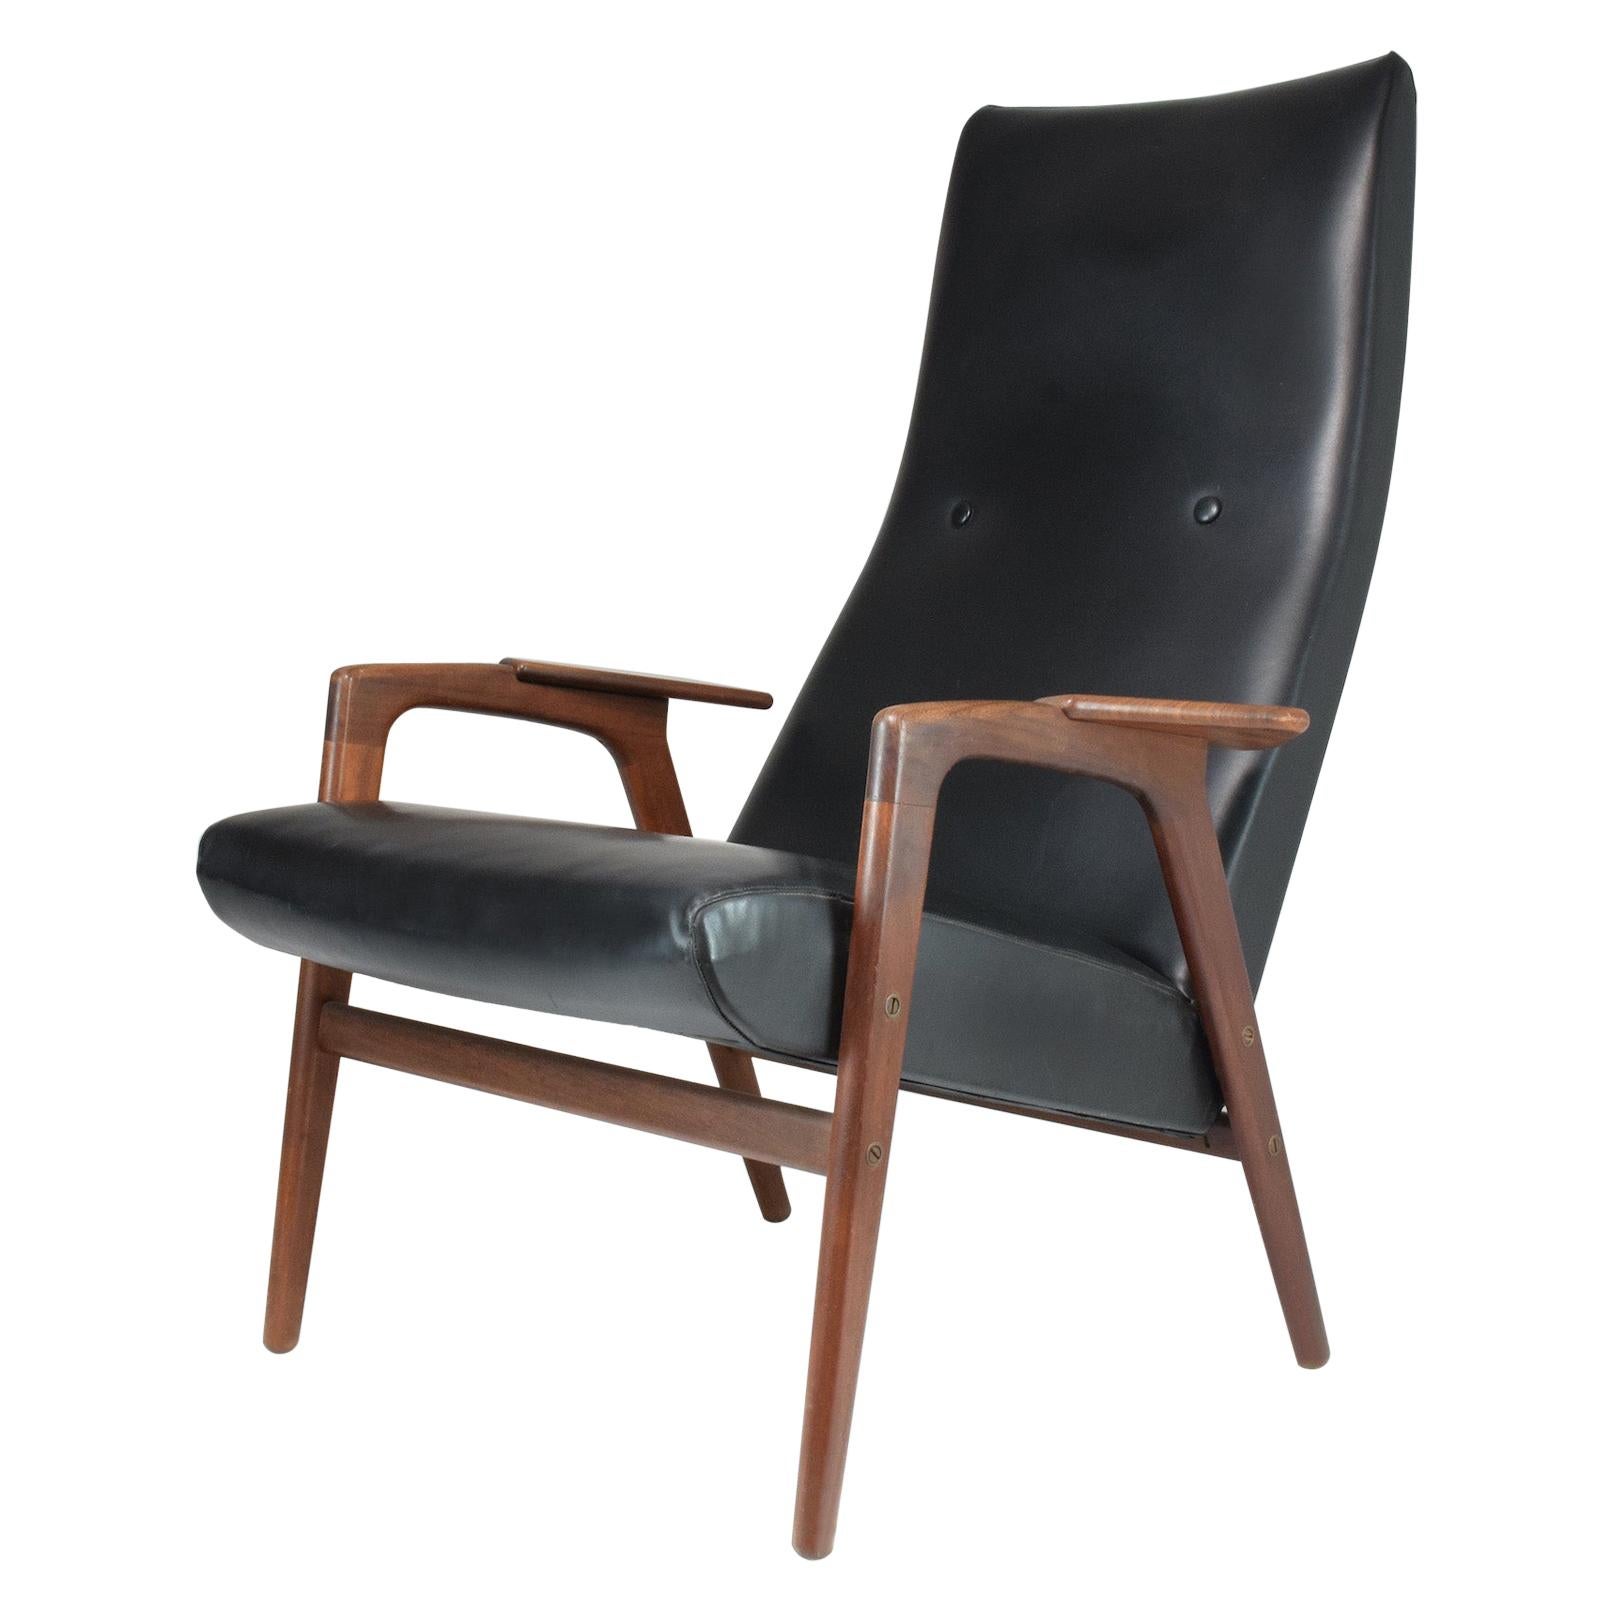 1960's Ruster Lounge Chair by Yngve Ekström for Pastoe